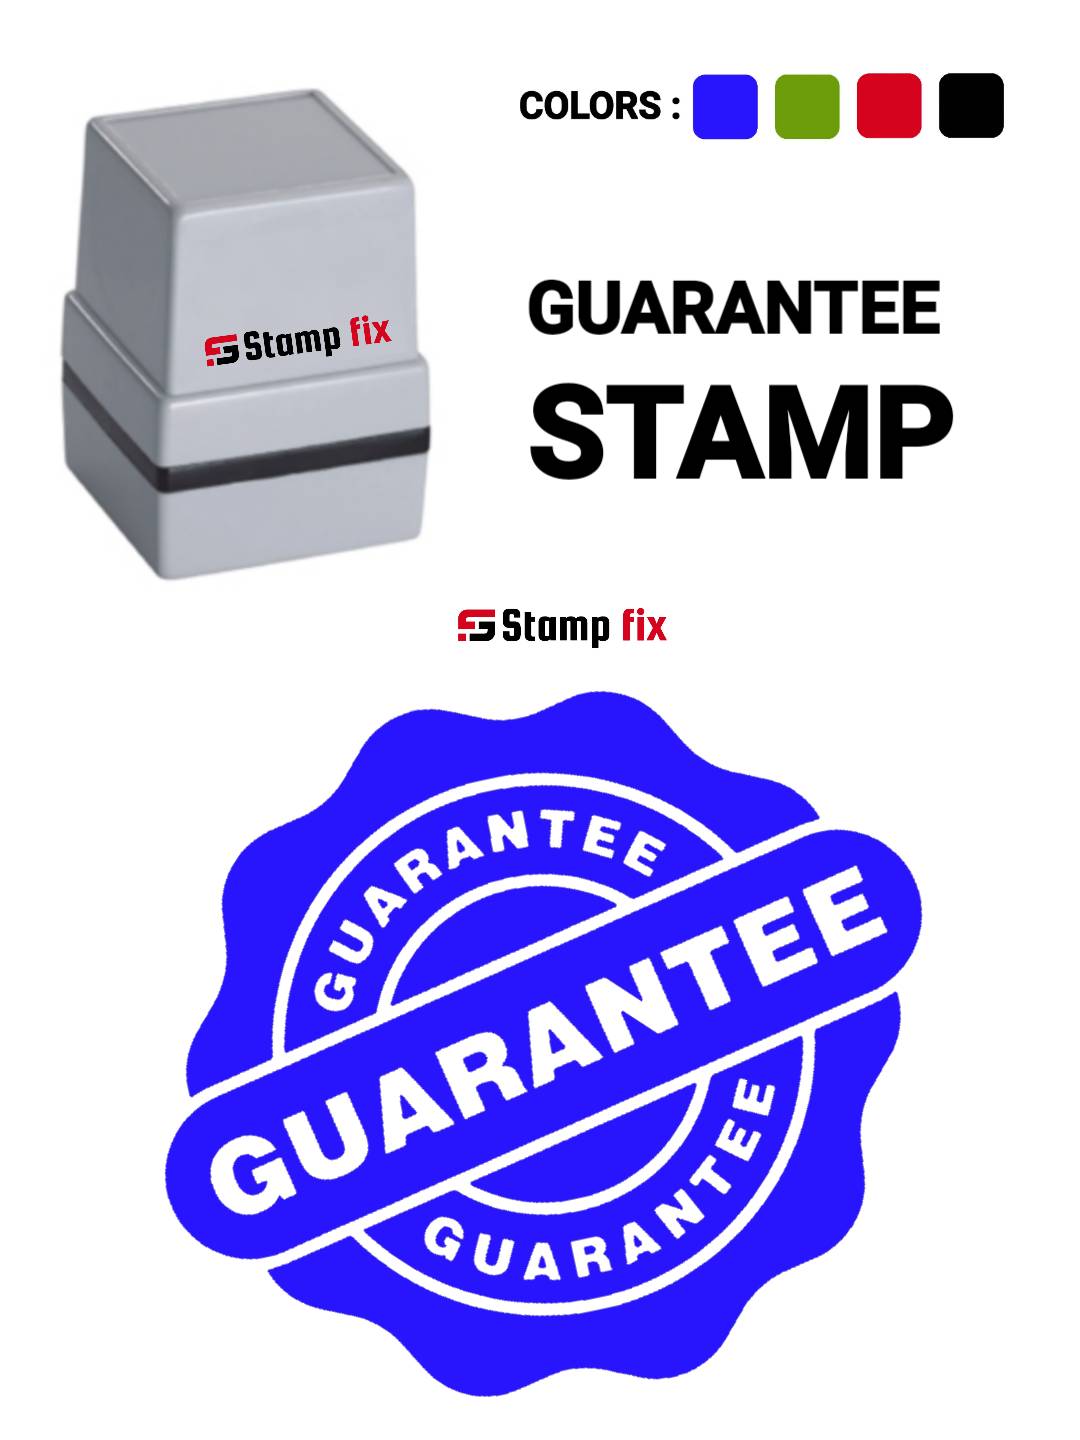 Guarantee stamp, Self ink stamp, pre ink stamp, sun stamp, rubber stamp, nylon stamp, polymer stamp